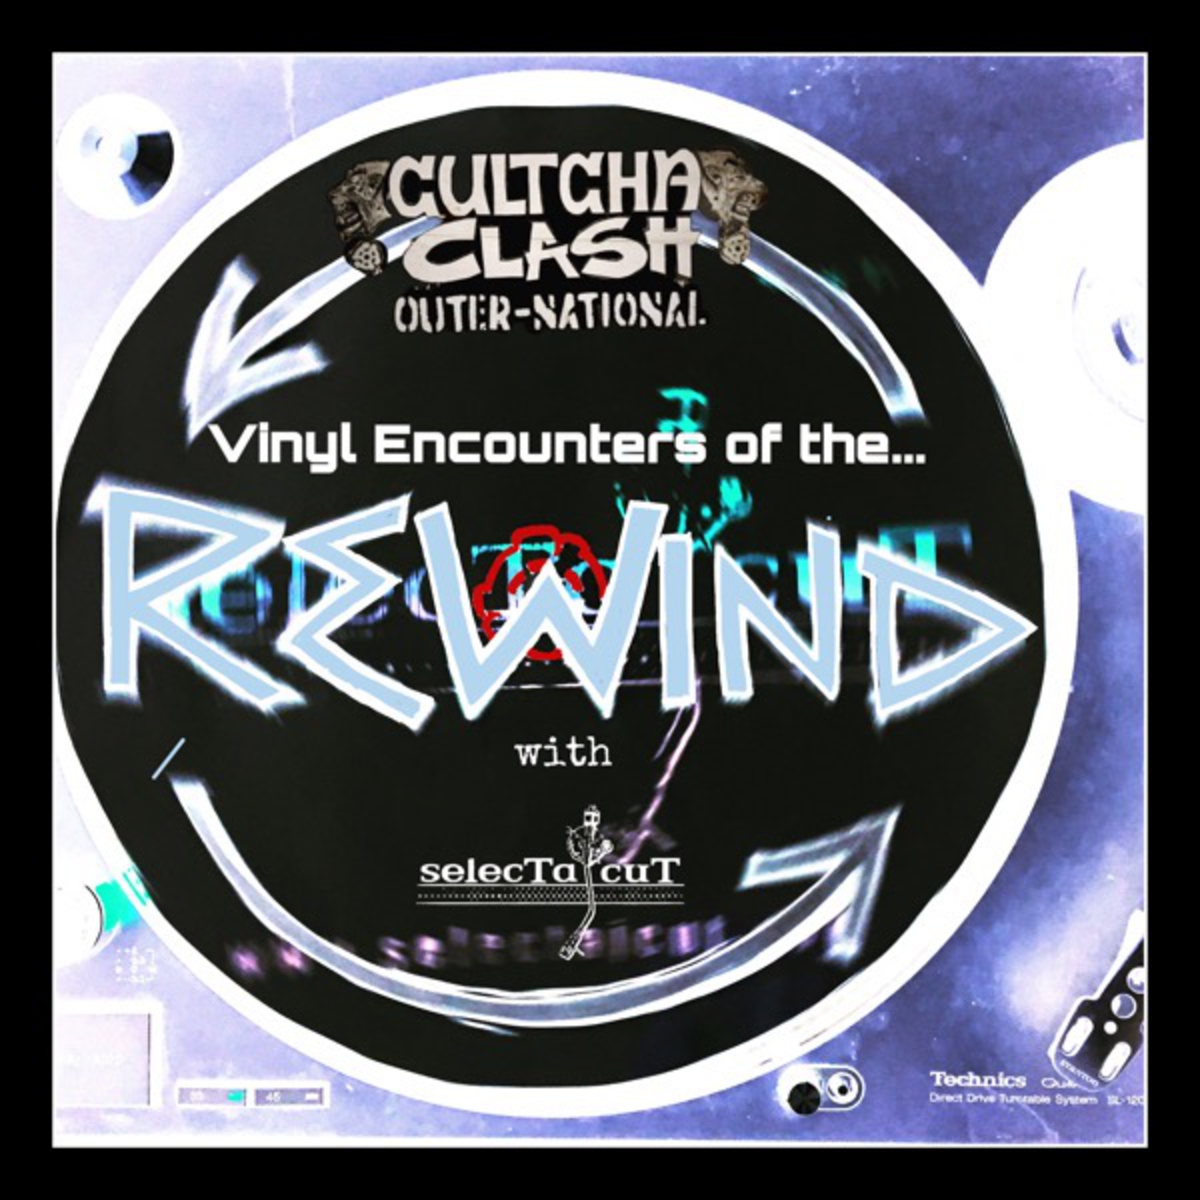 Vinyl Encounters of the... Rewind!